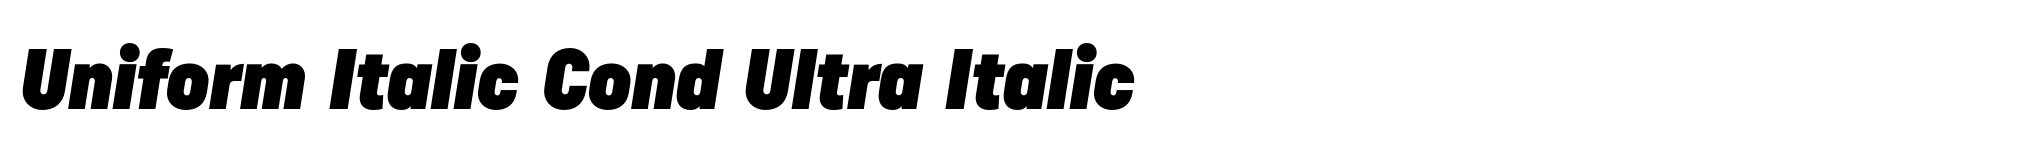 Uniform Italic Cond Ultra Italic image